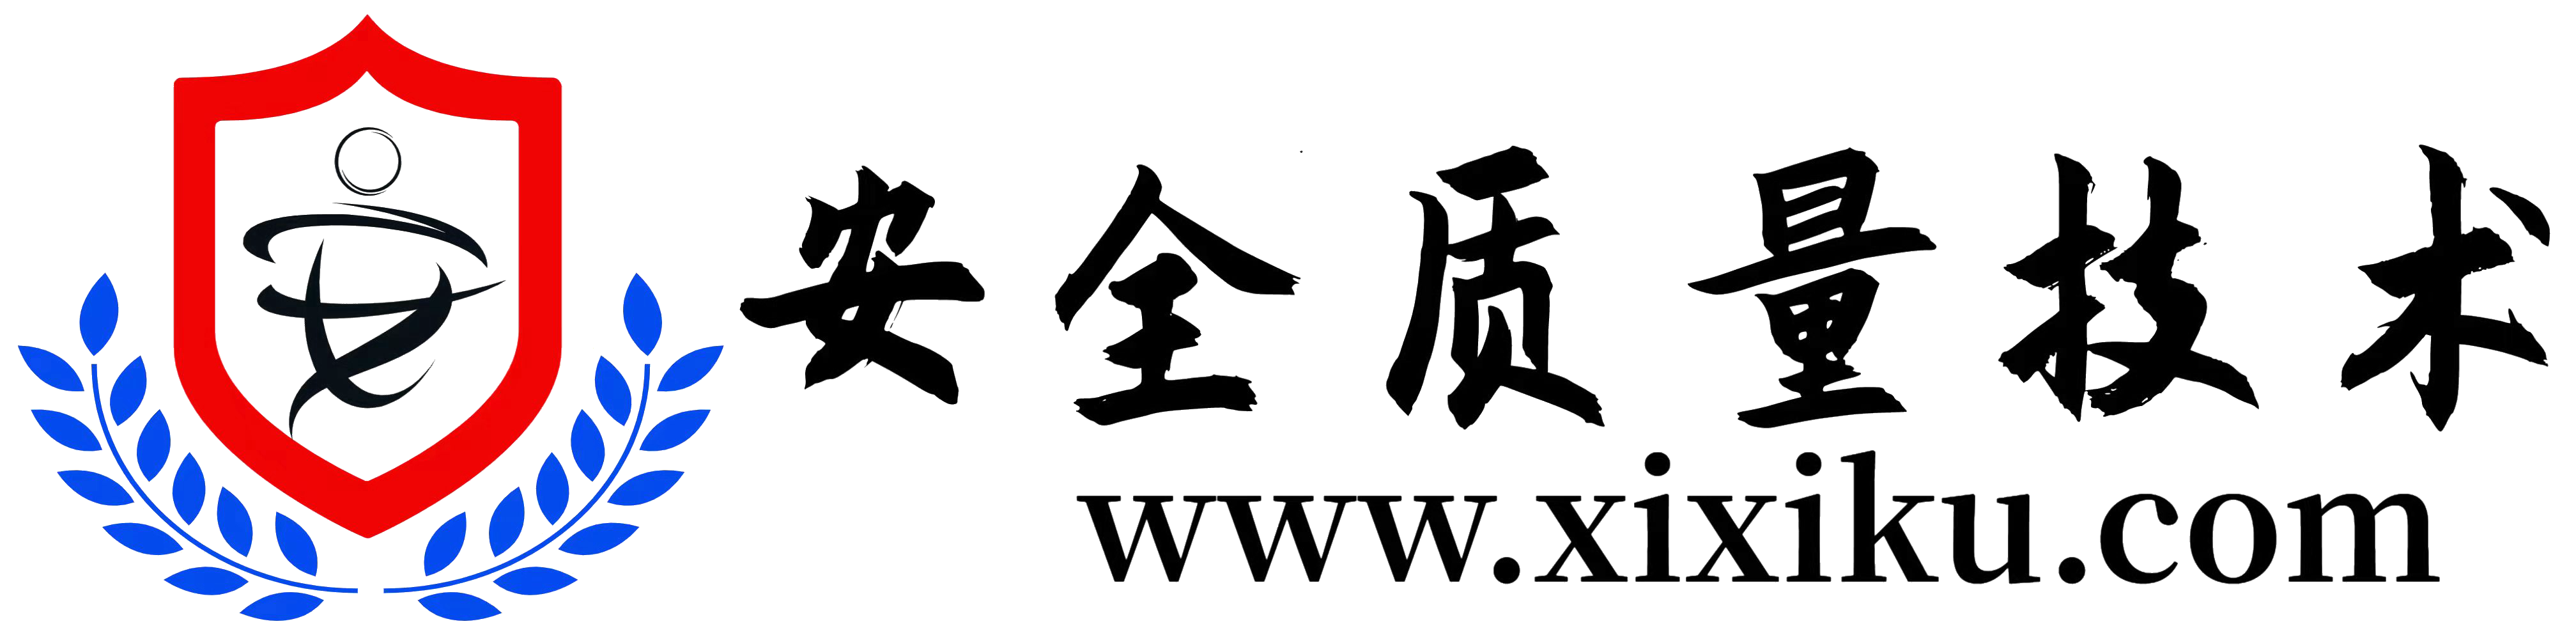 www.xixiku.com 